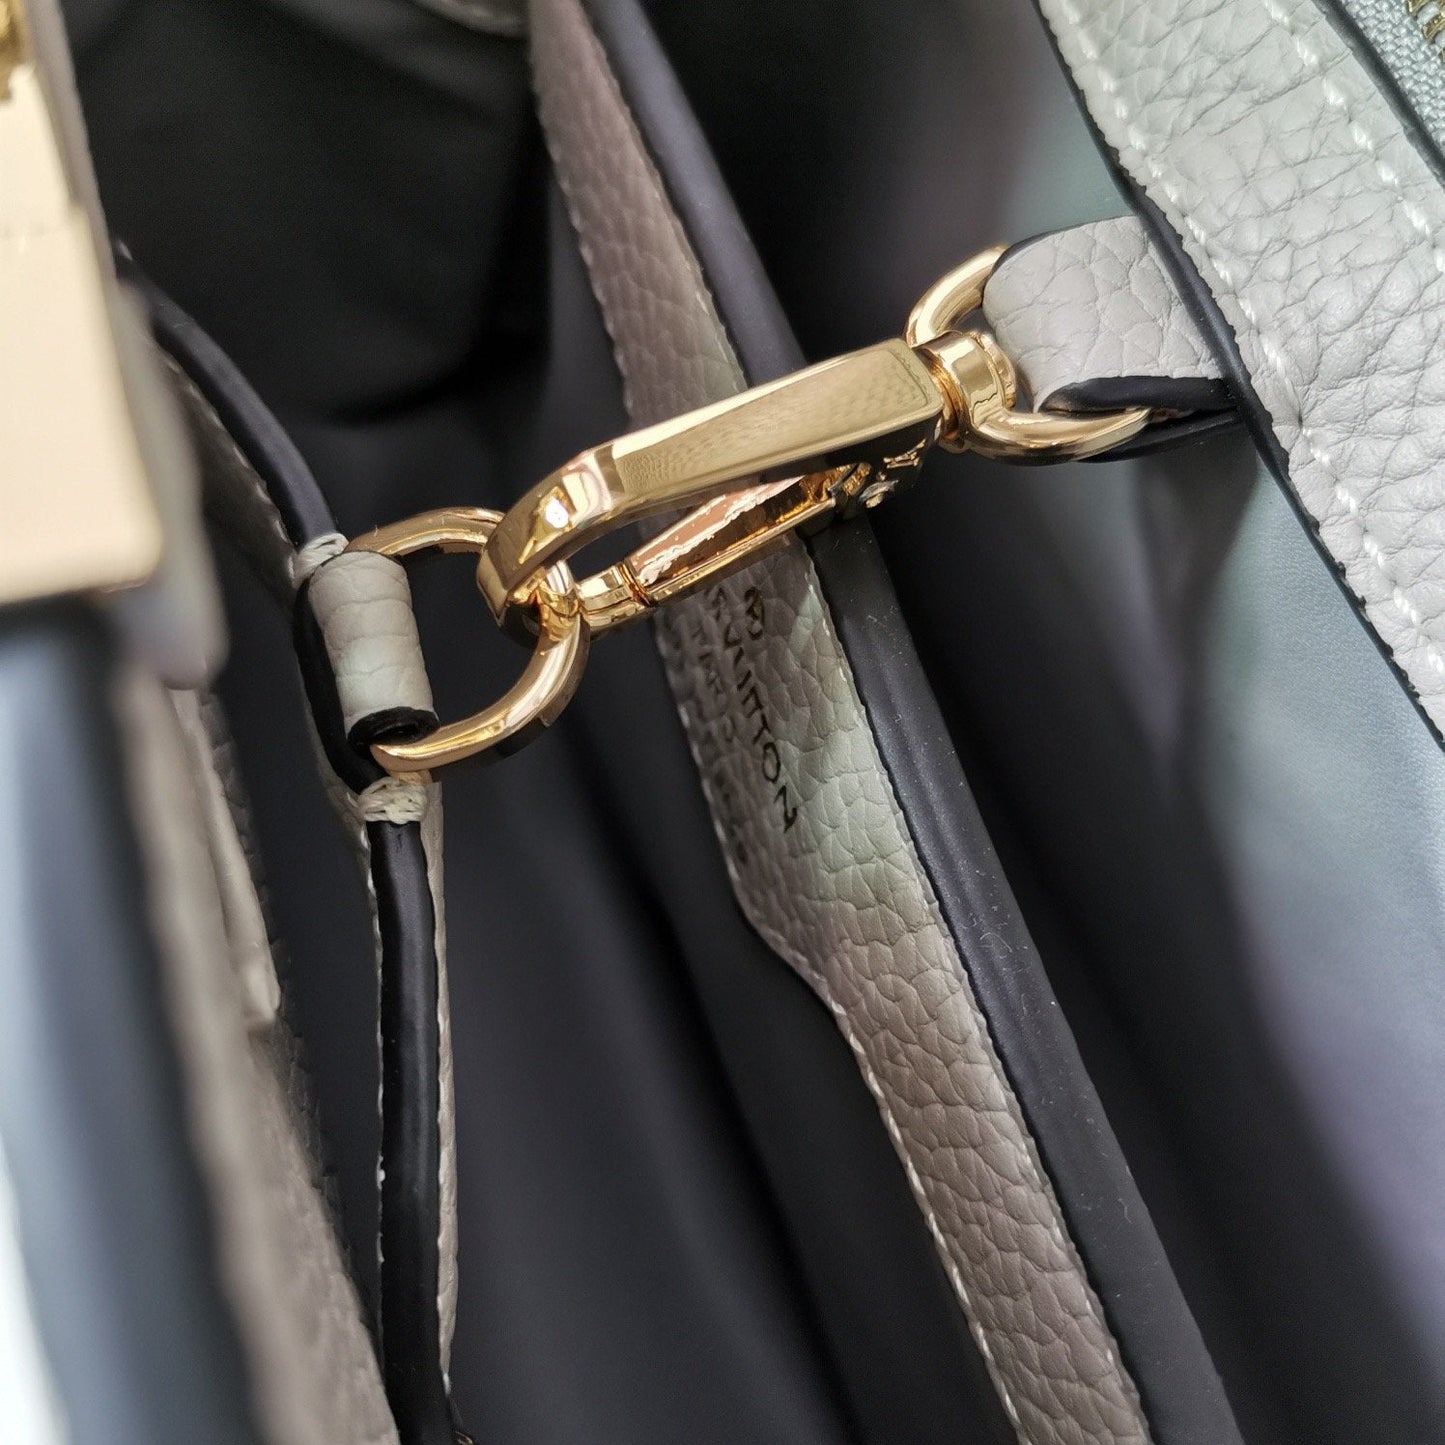 EI - Top Handbags LUV 244